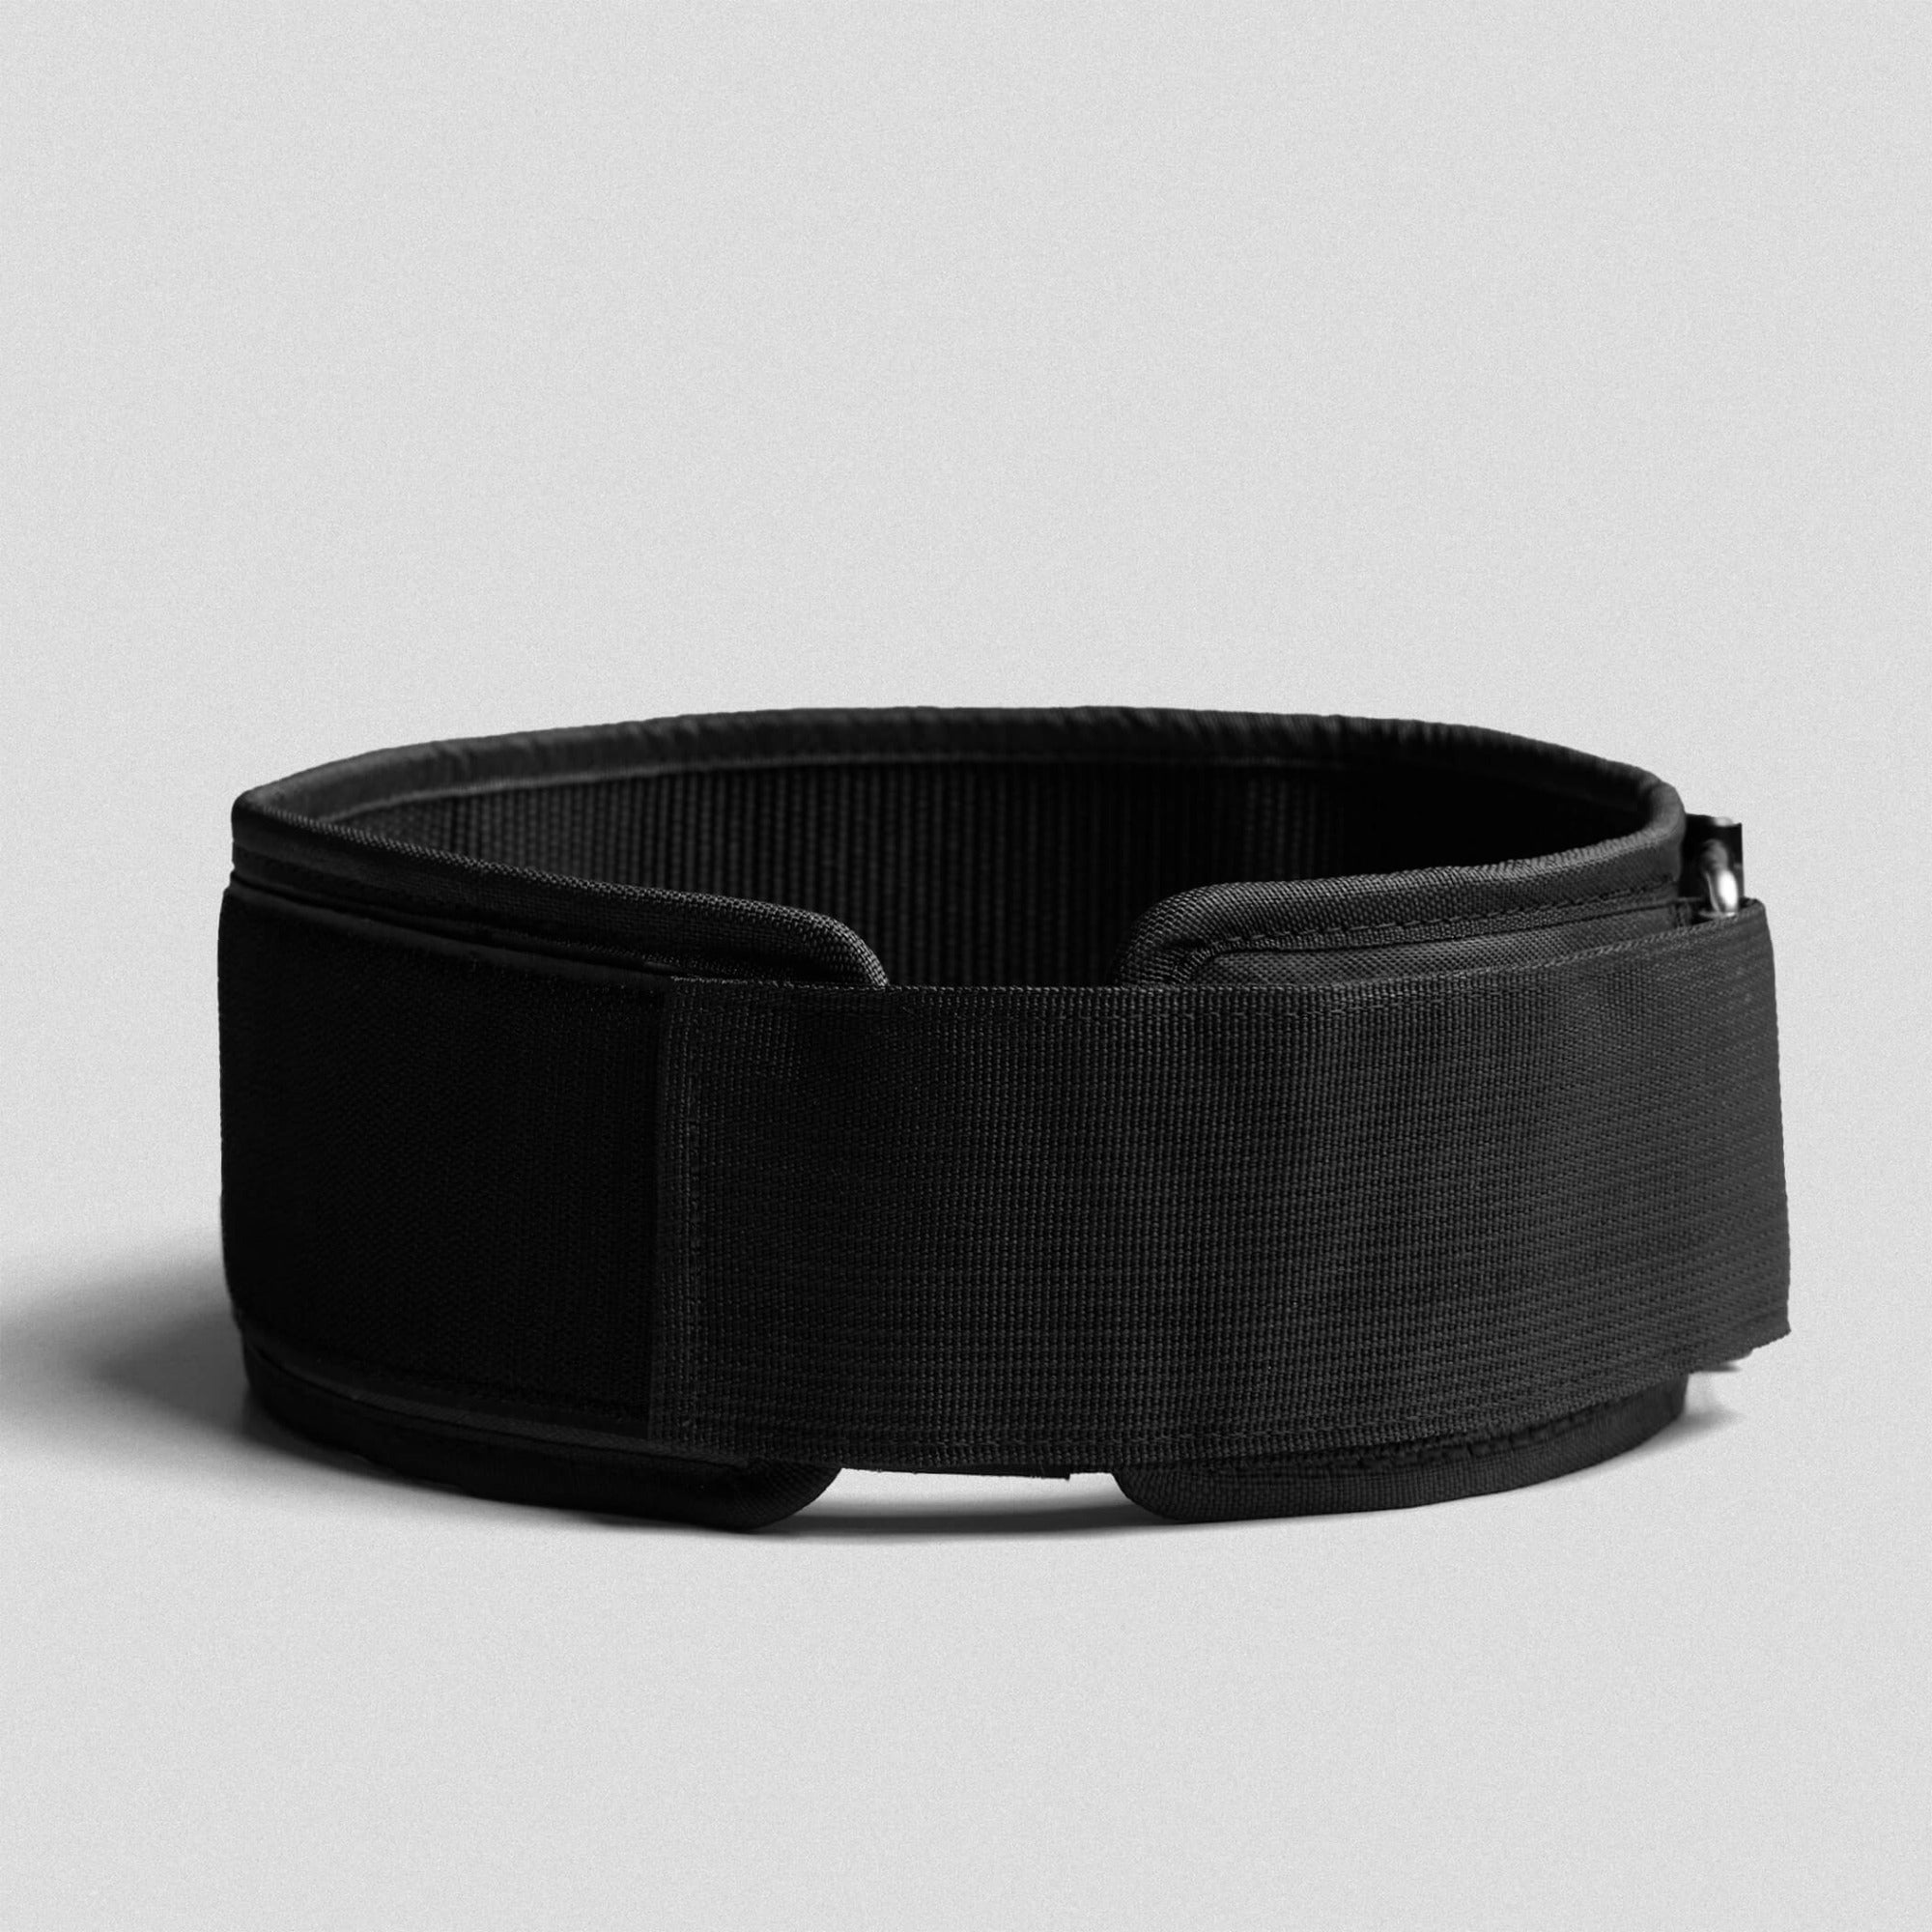 quick lock belt all black strapped